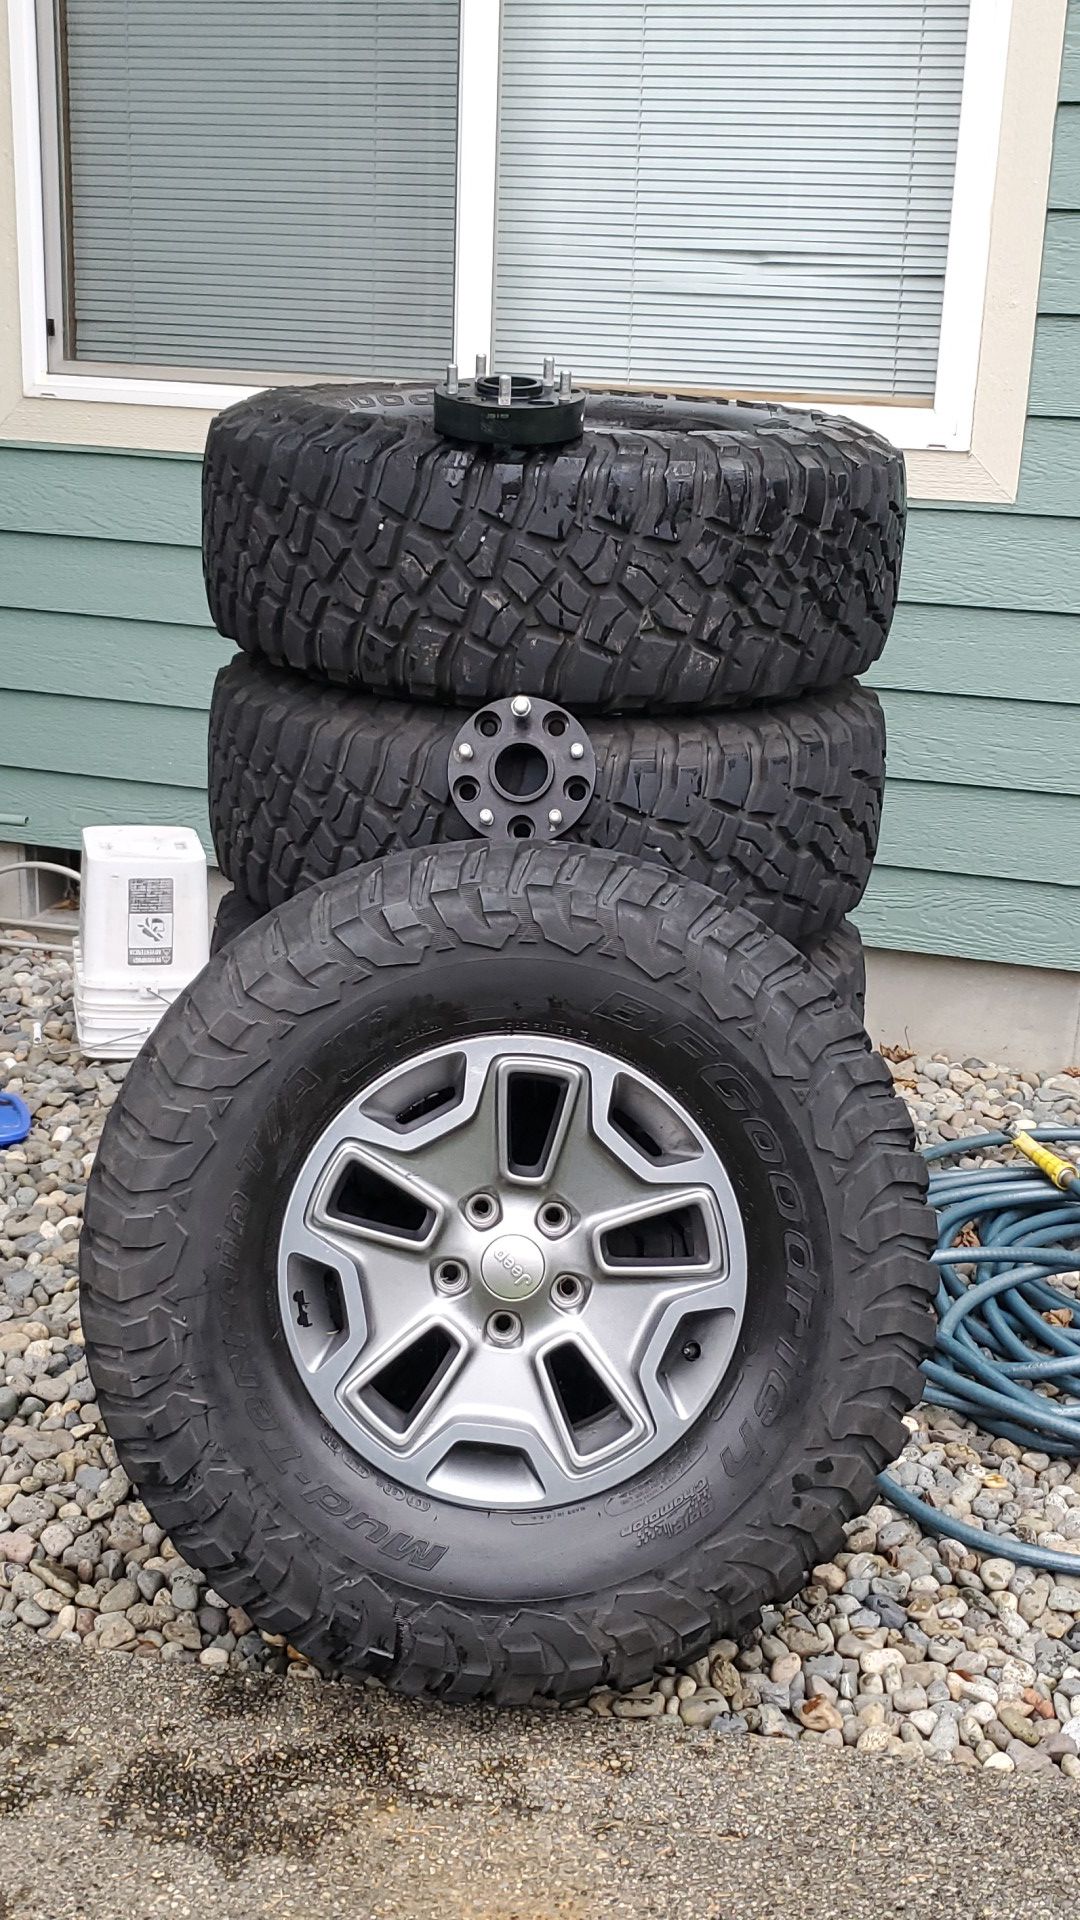 2017 jk jeep wheels with bfg km3 tires